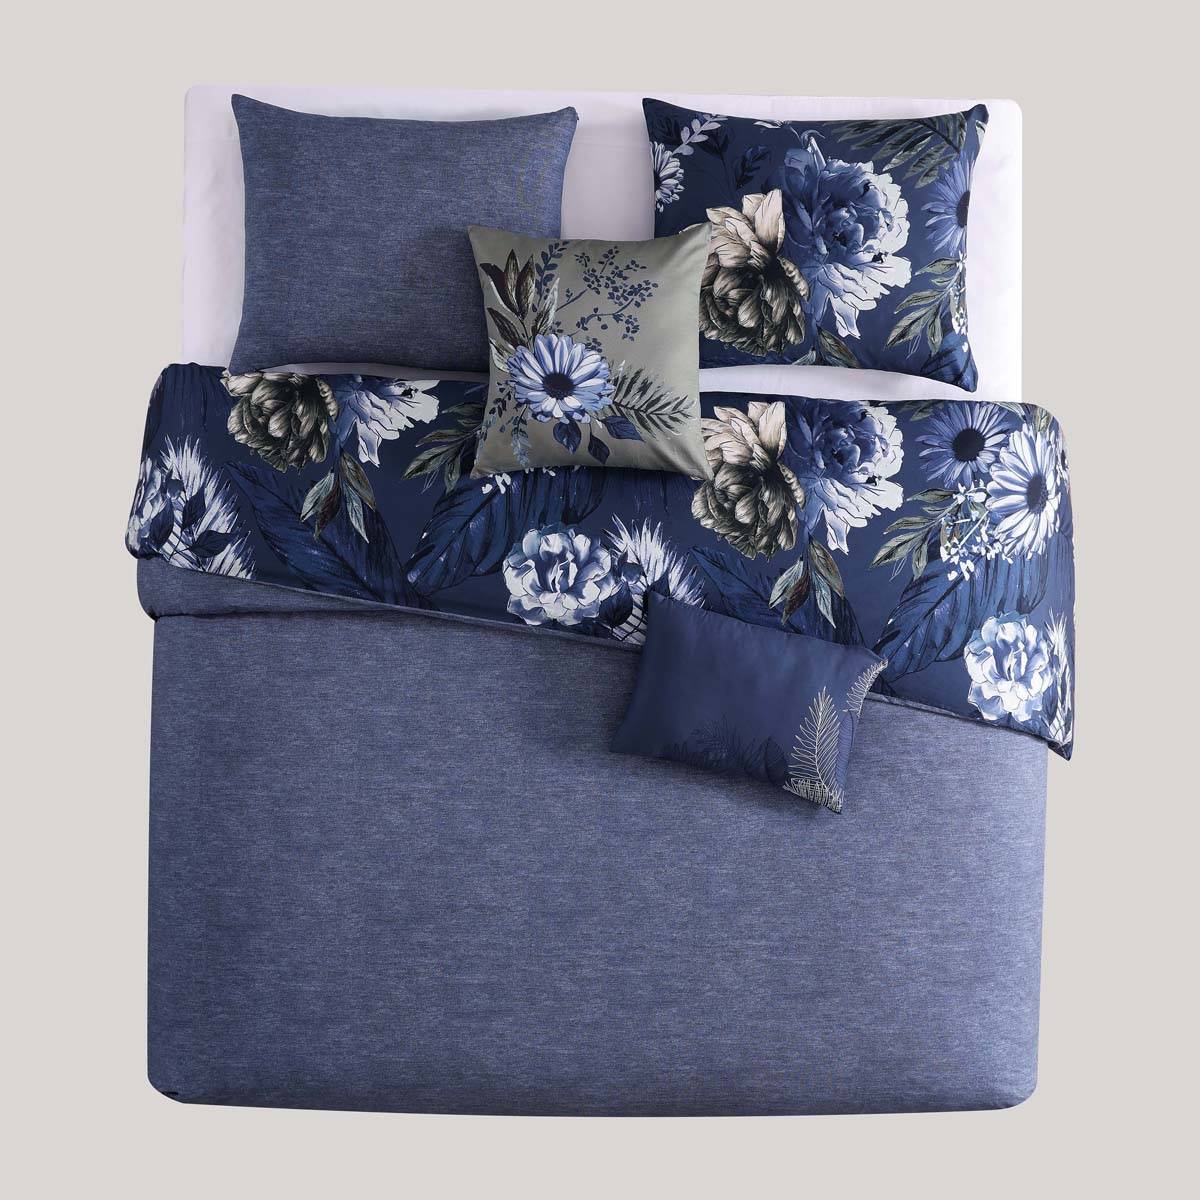 Bebejan(R) Delphine Blue 5pc. Reversible Comforter Set